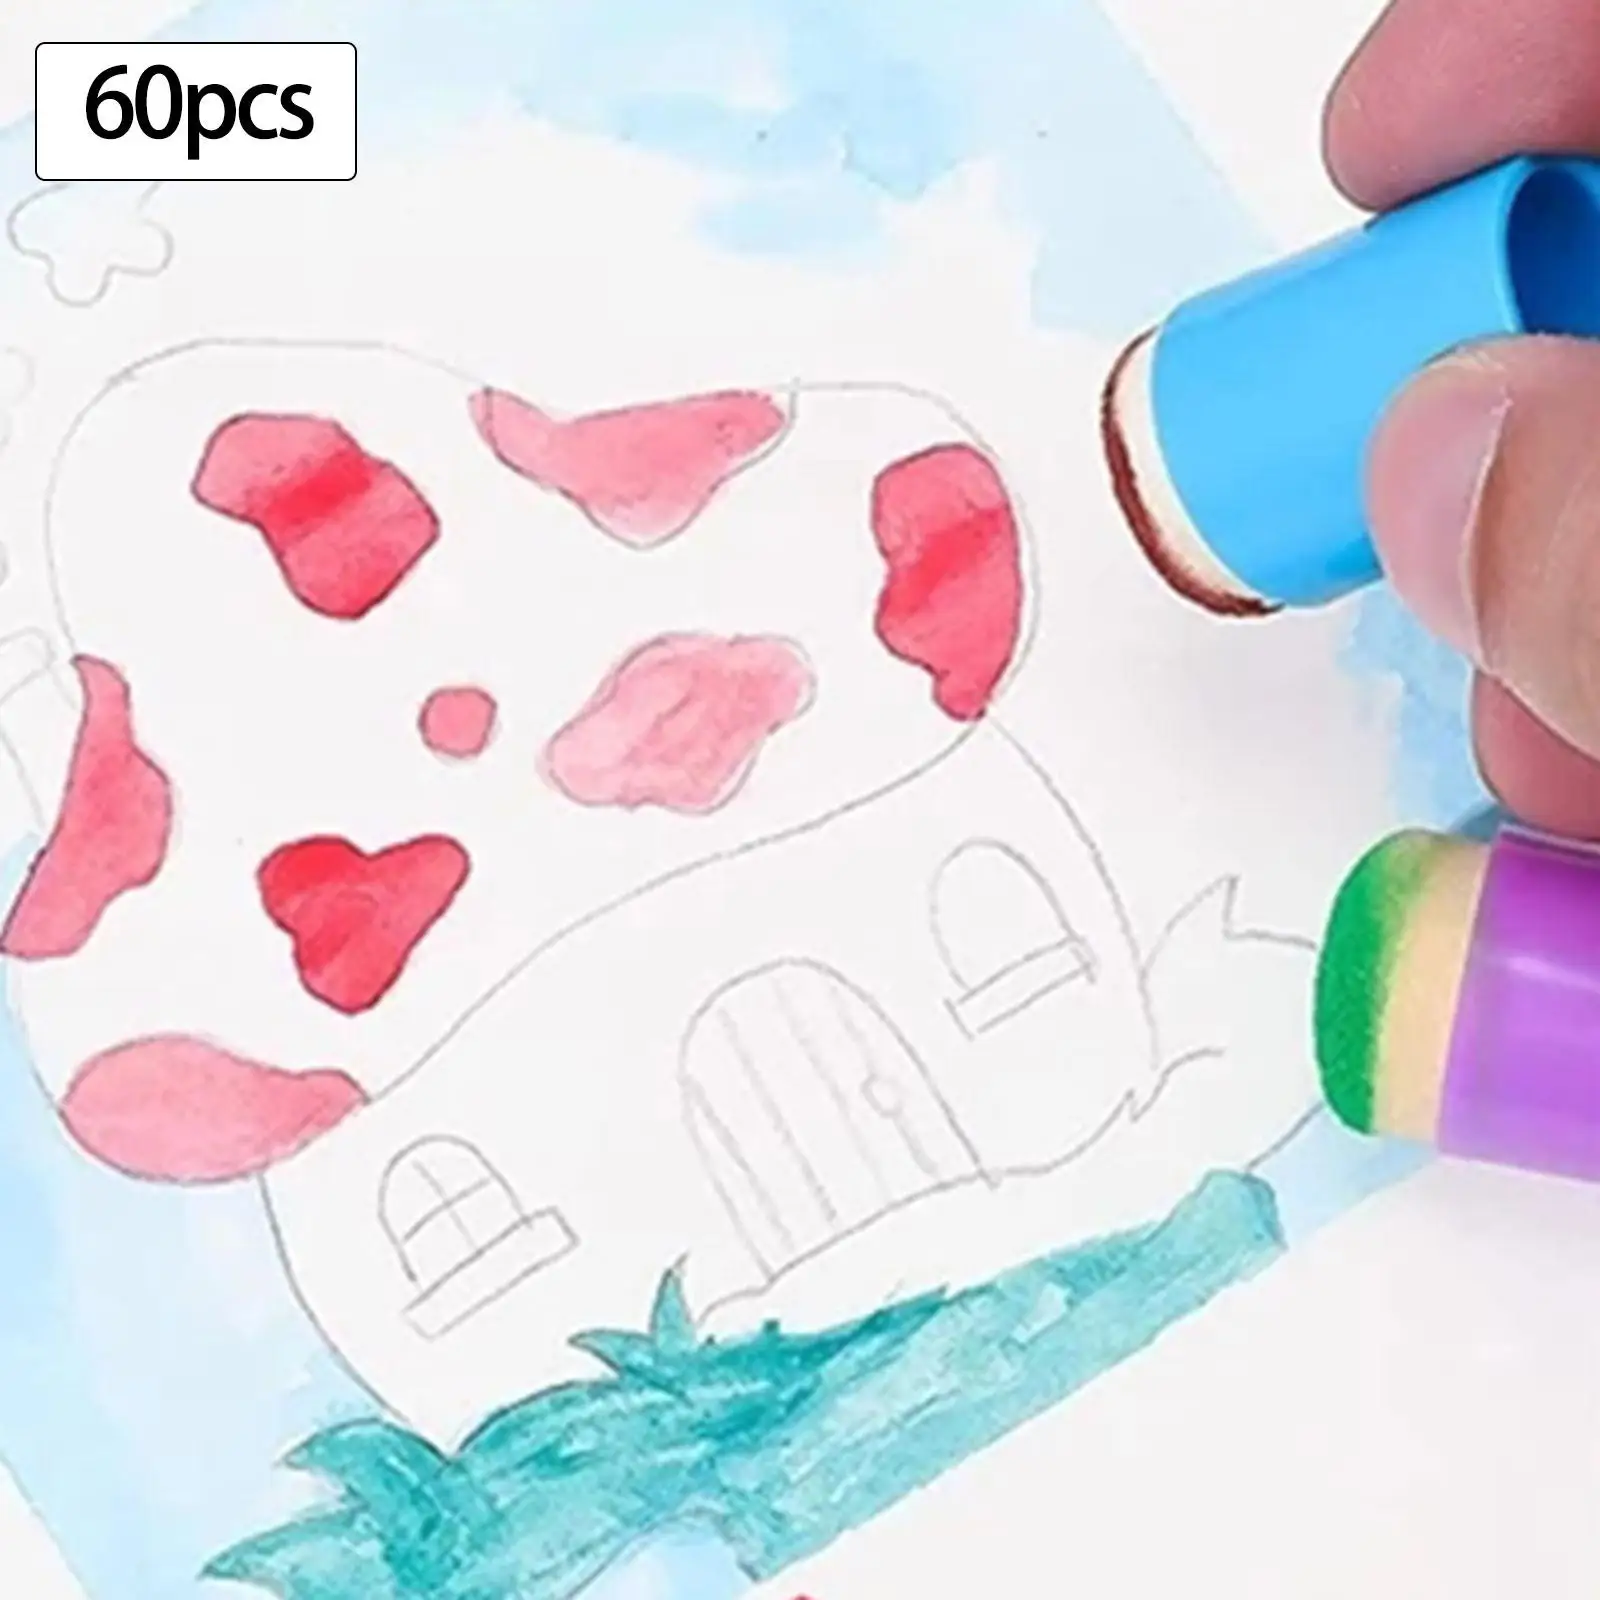 60Pcs Finger Sponge Daubers Stamping Foam Painting Ink Pads for Applying Ink